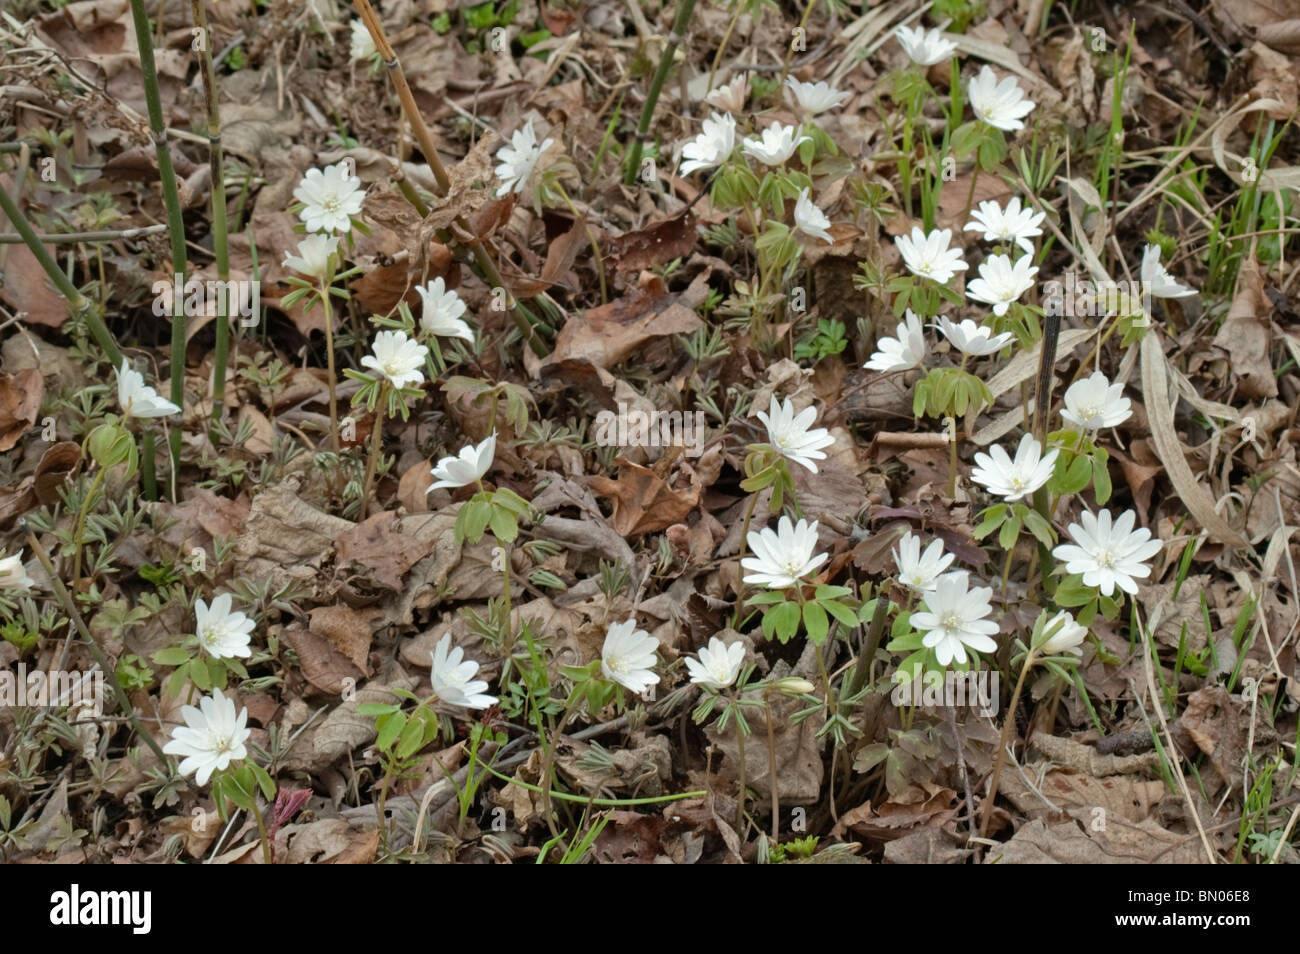 Radde Anemone flower (Anemonoides raddeana) Stock Photo